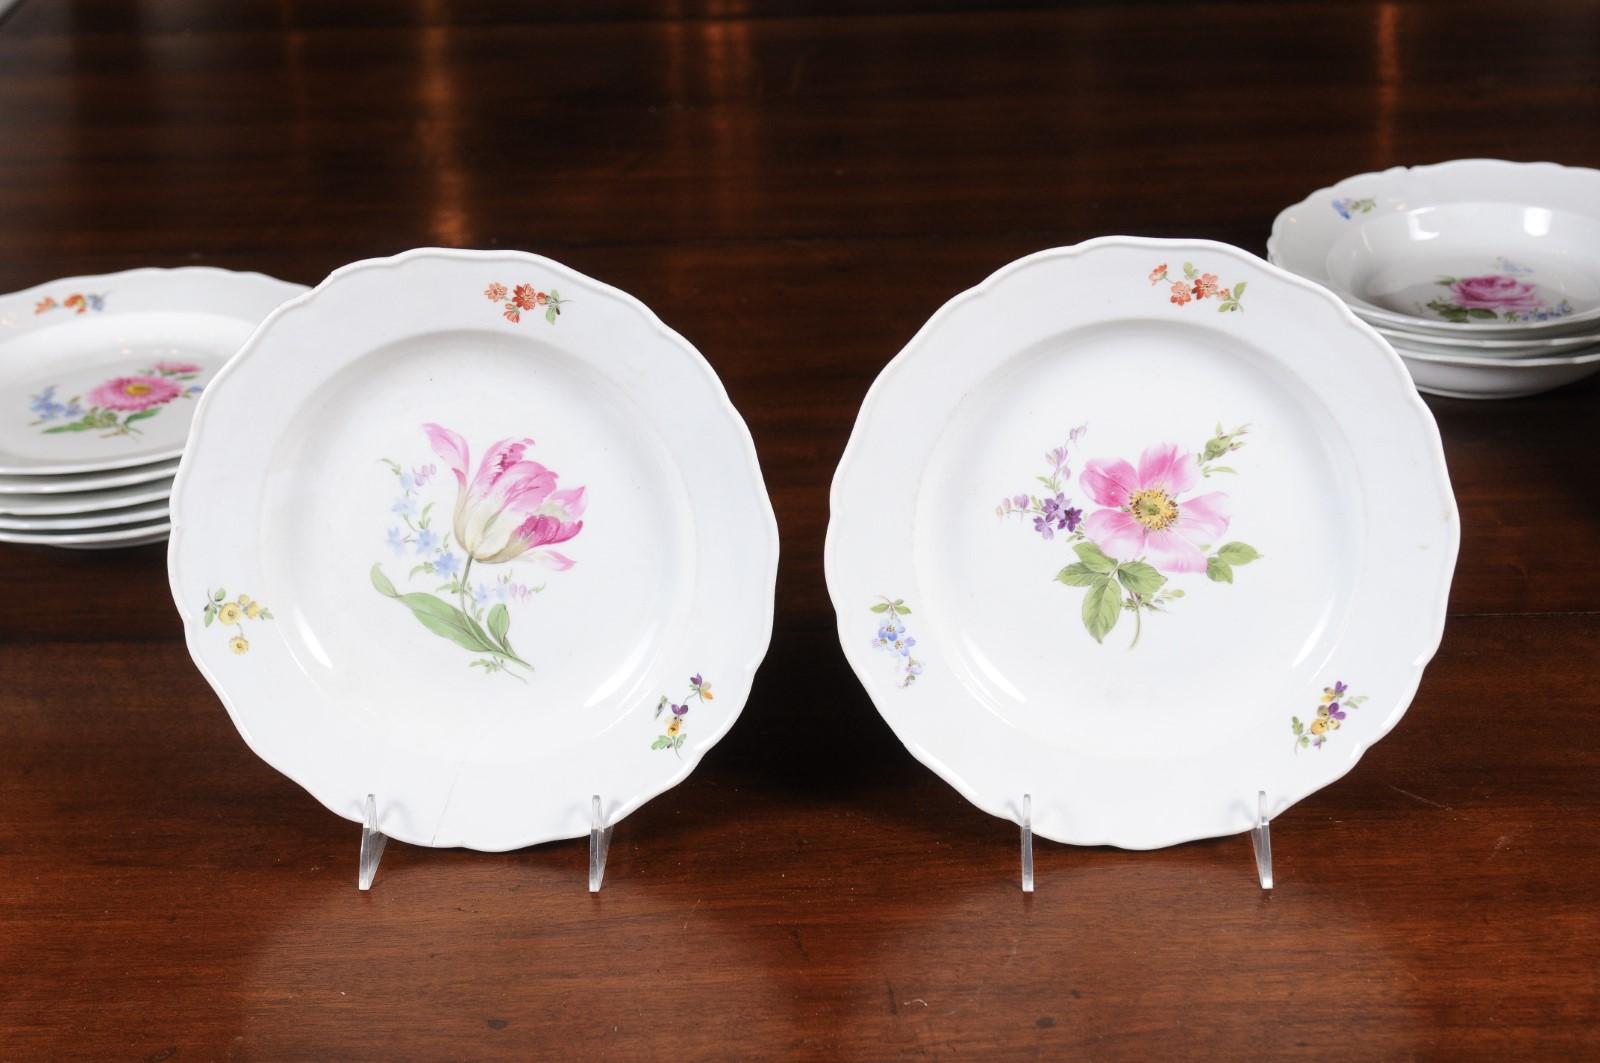 19th Century Set of 24 Pieces German Meissen Porcelain Dinner Service with Floral Decor For Sale